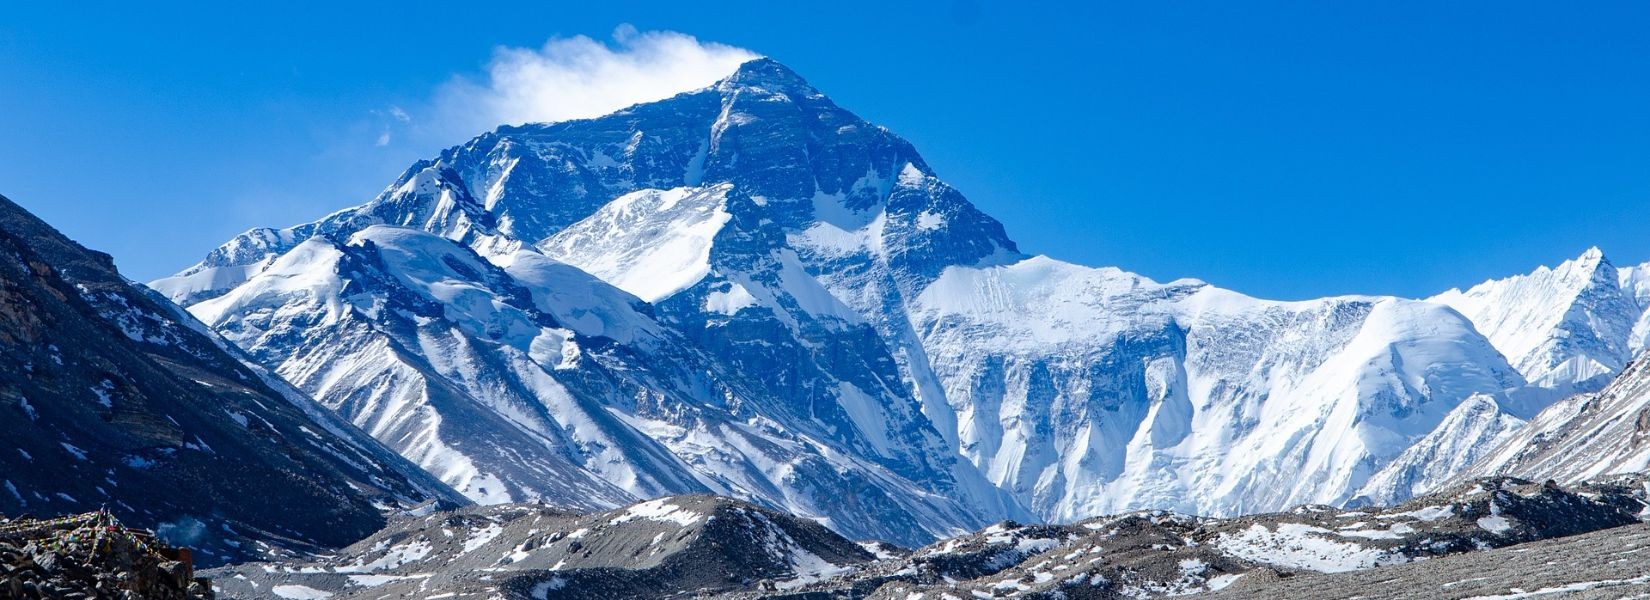 Mount Everest From Tibet